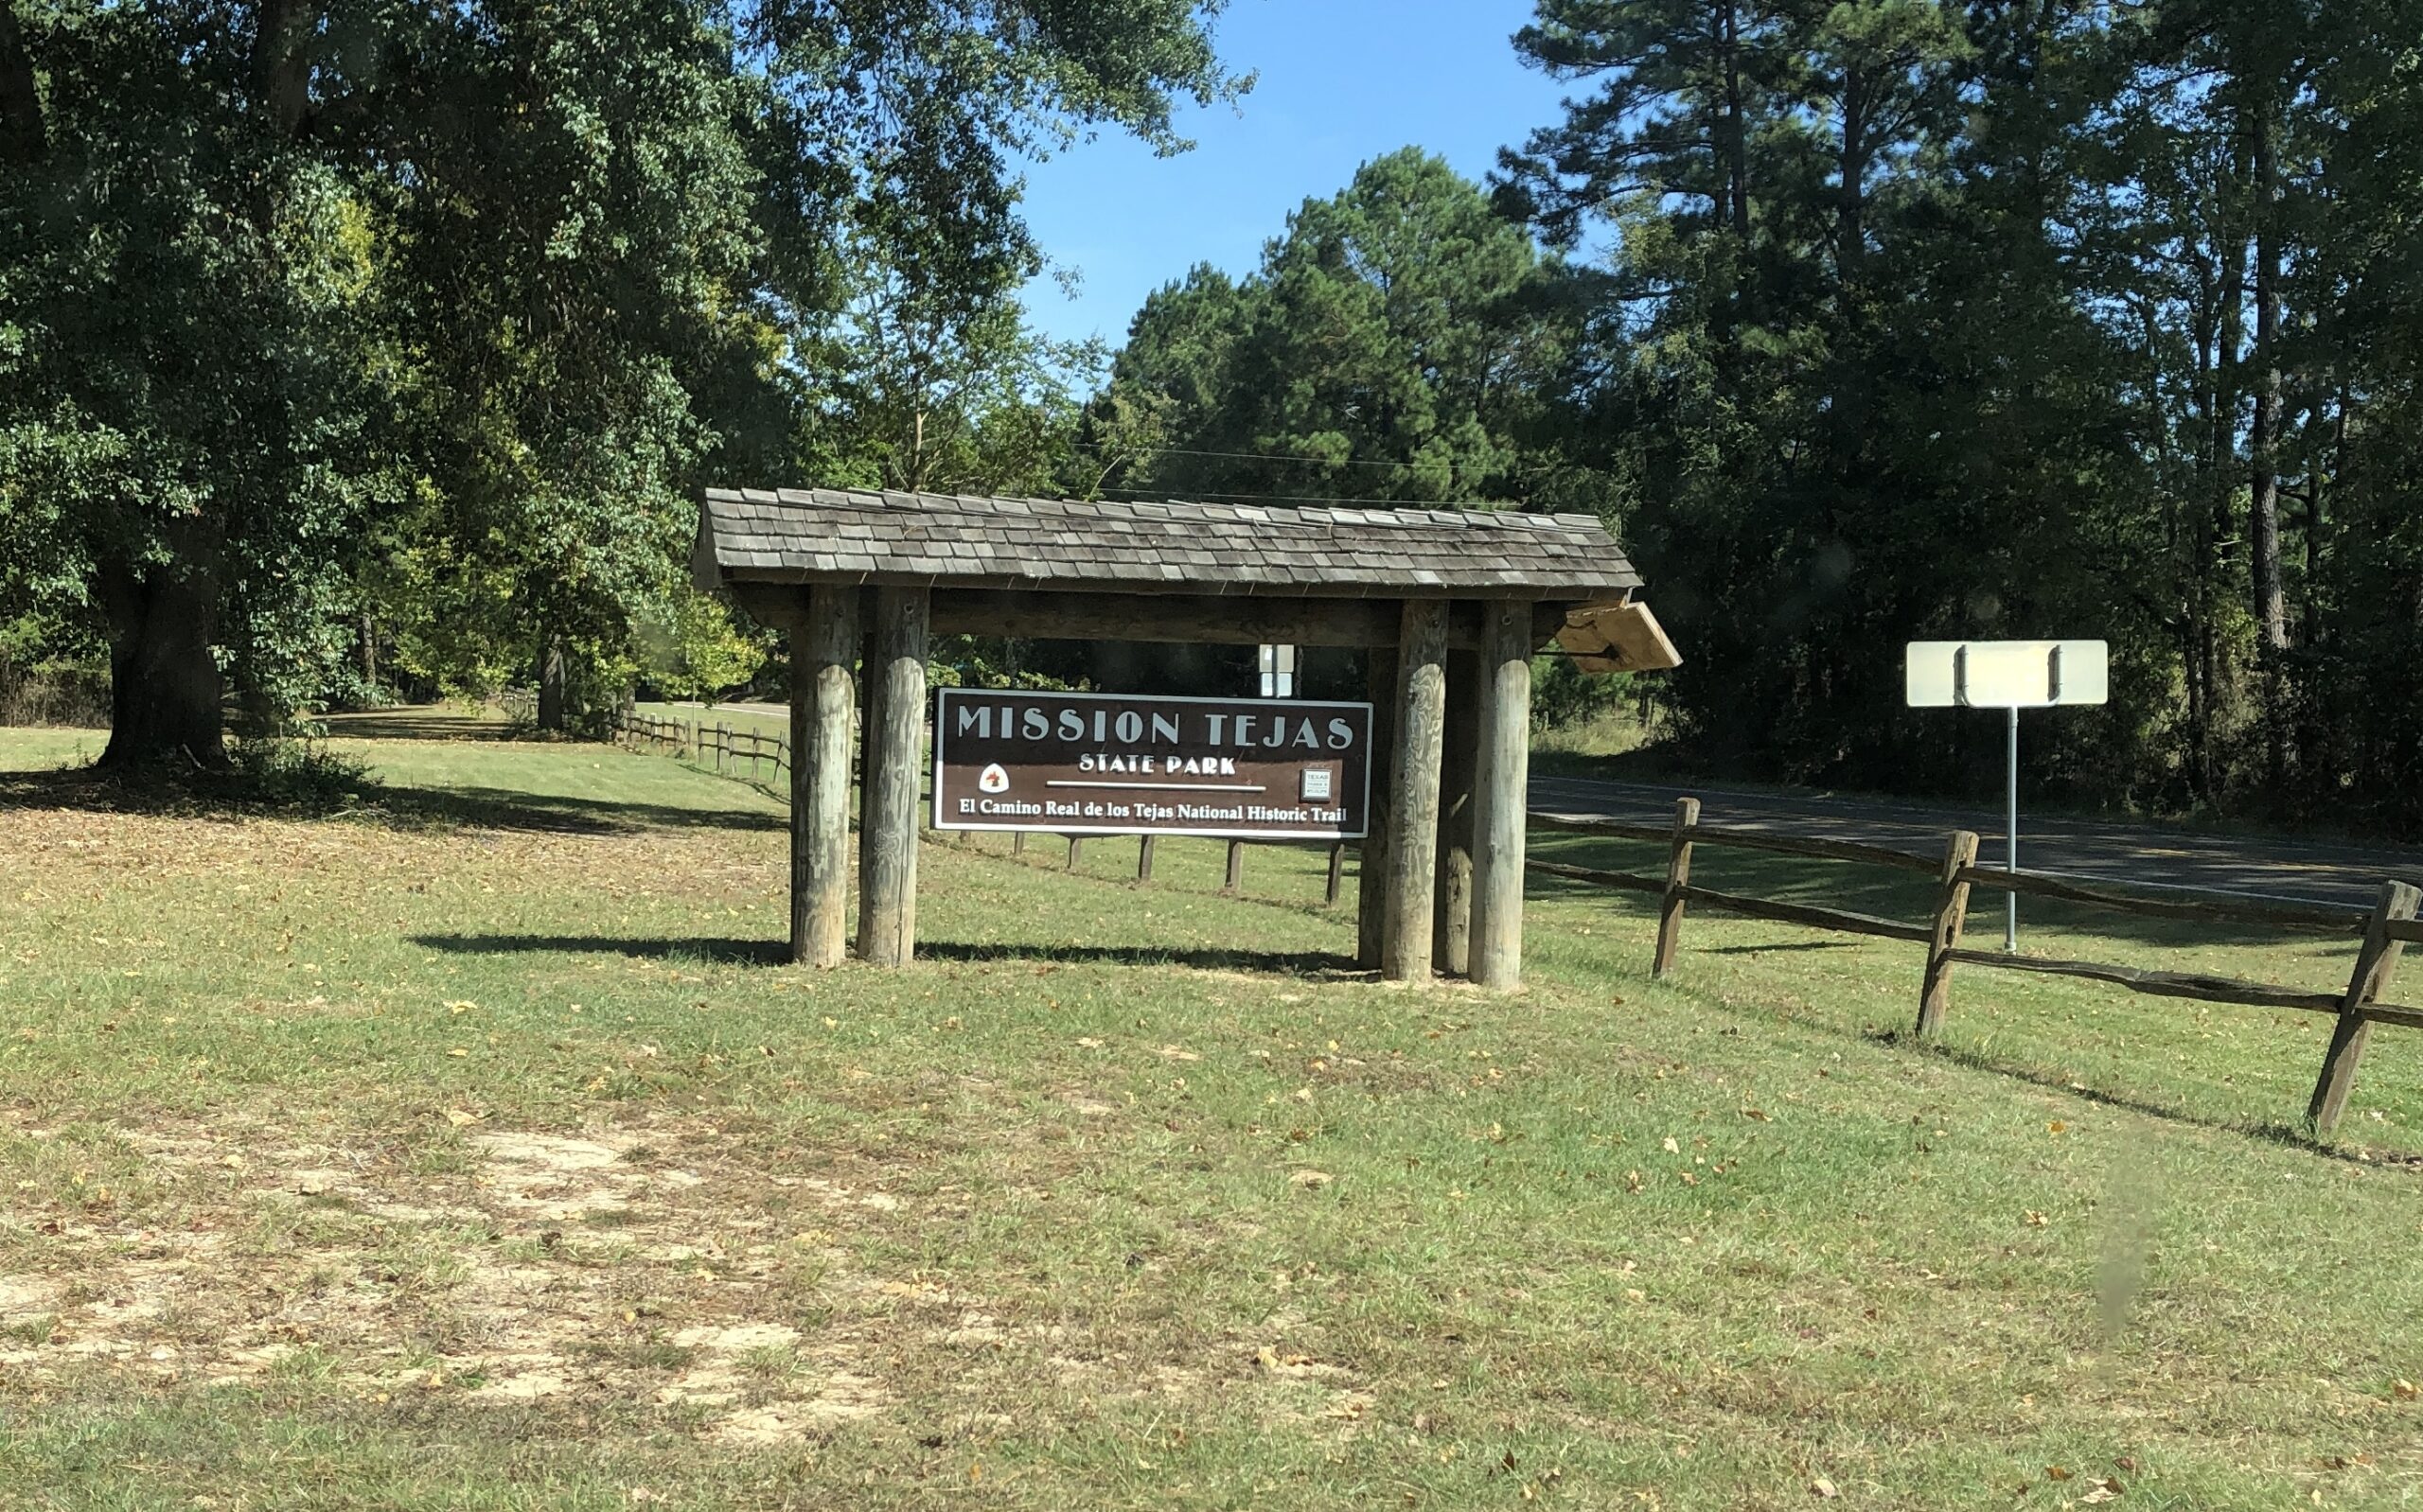 Mission Tejas State Park - The Texas Trailhead